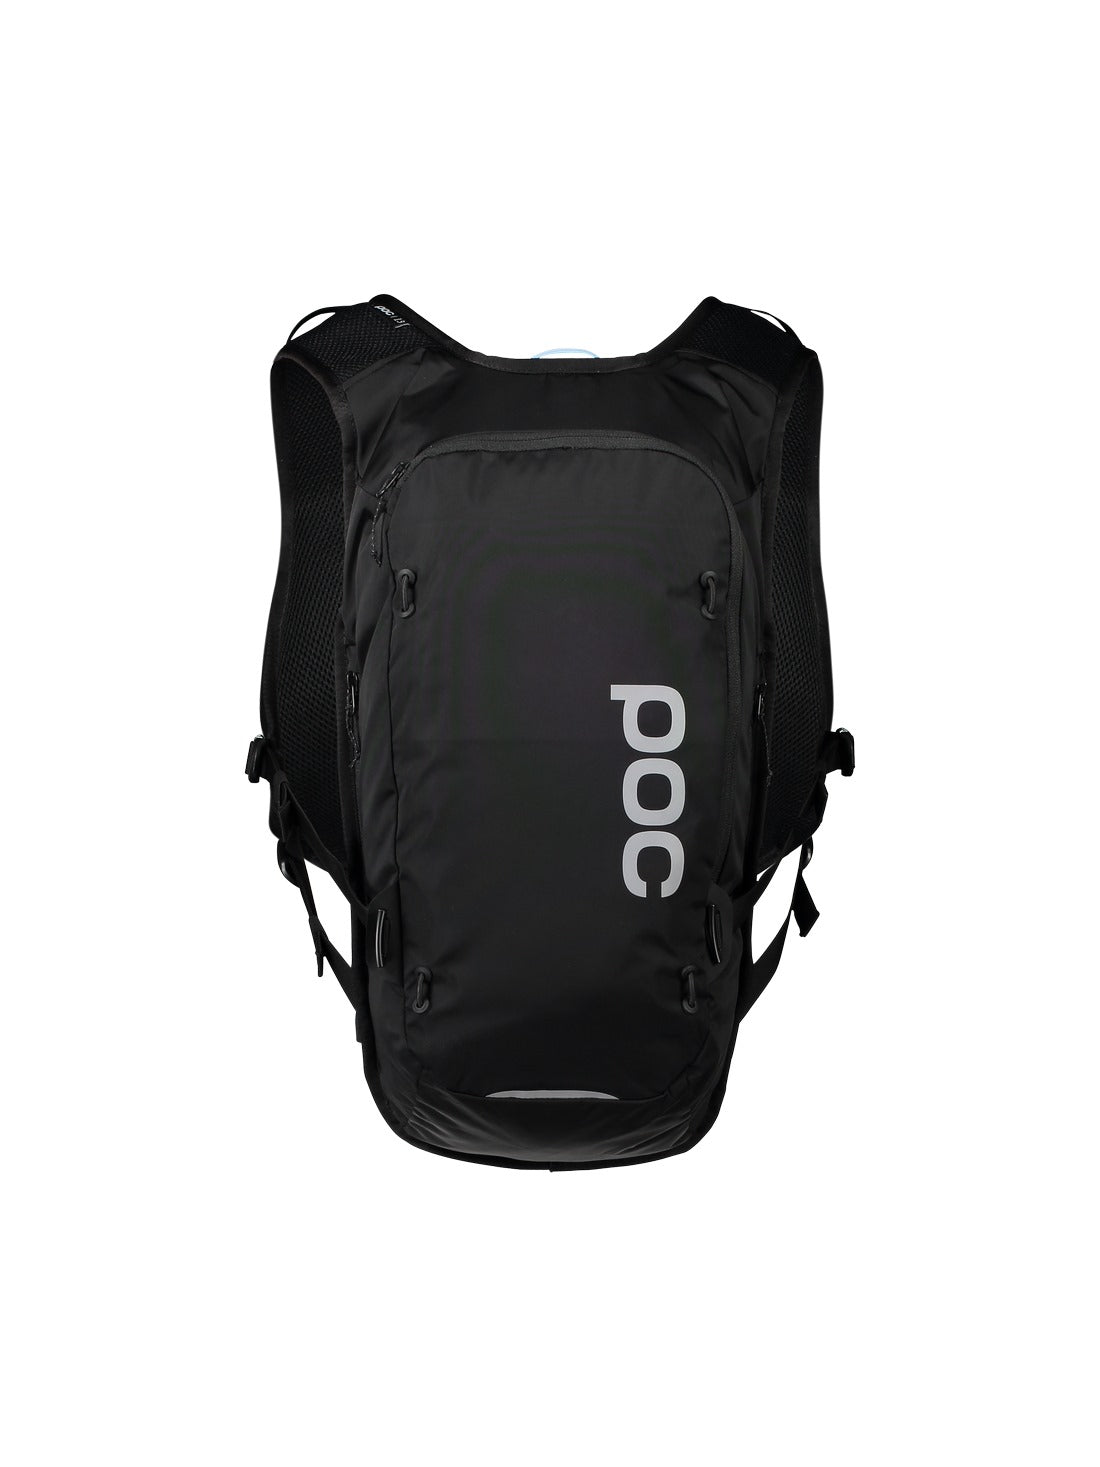 Plecak z ochraniaczem POC COLUMN VPD Backpack 13L - Ur. Black